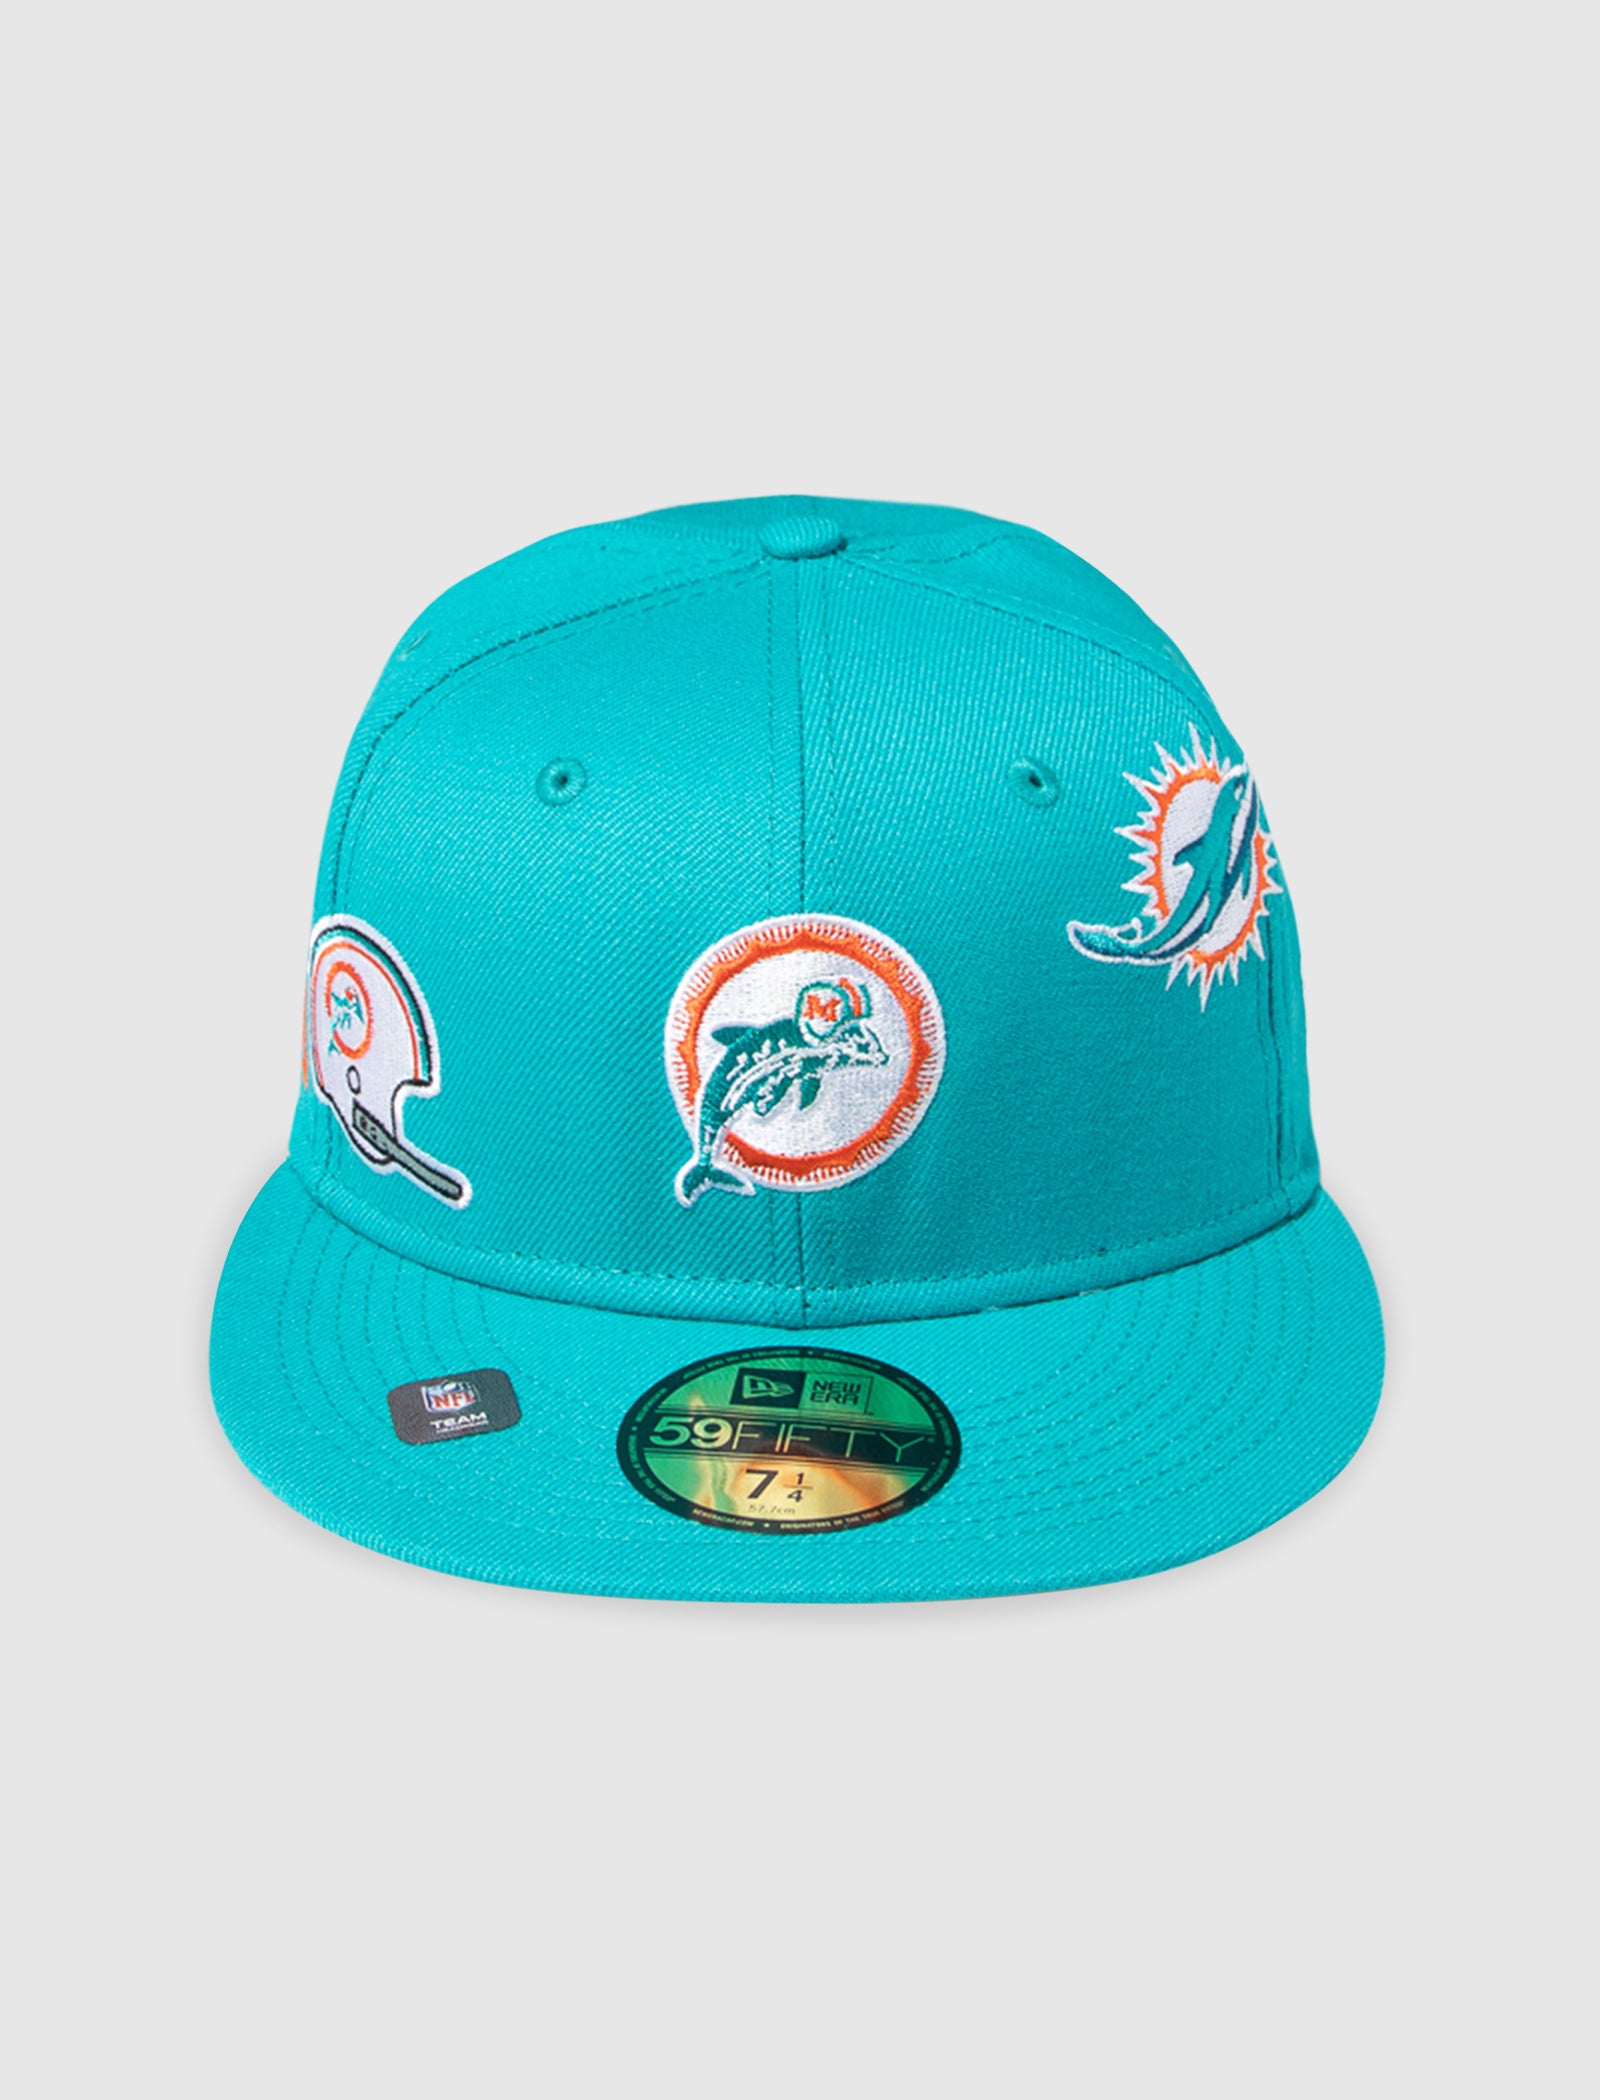 miami dolphins throwback logo hat